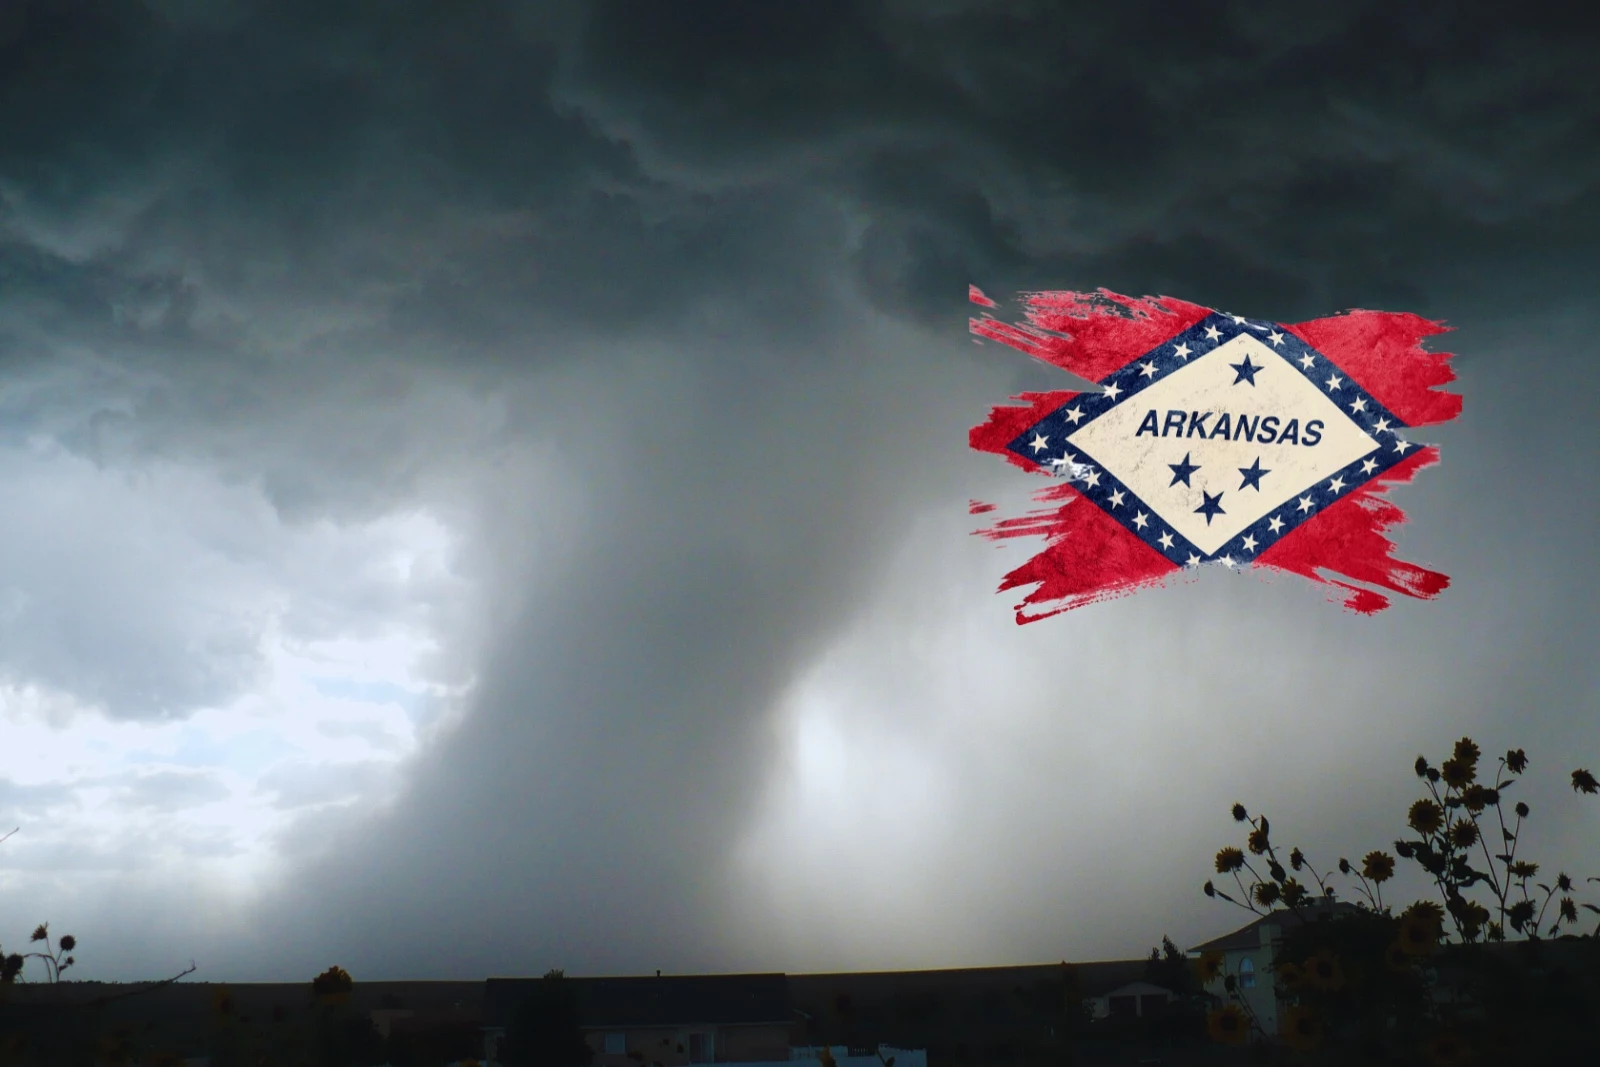 Watch Eerie Tornado Rip Through a Parking Lot in Arkansas